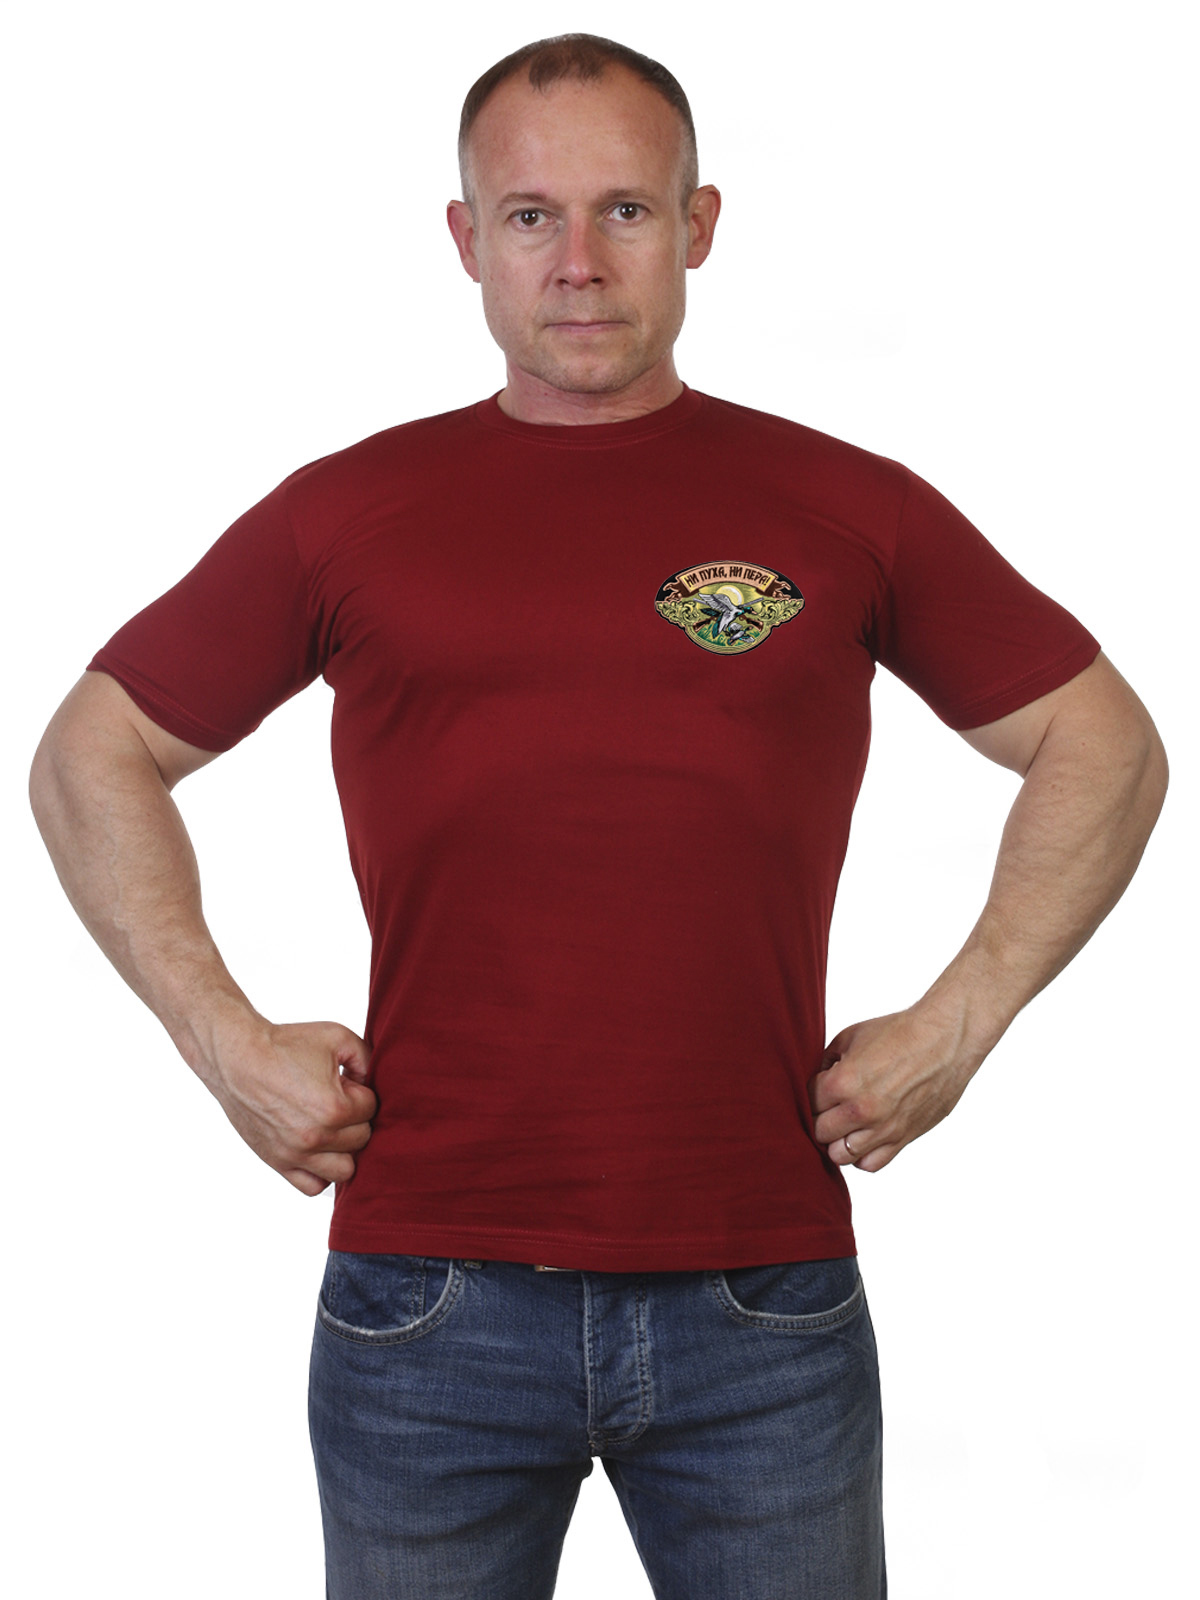 Мужская футболка "Ни пуха, ни пера" доступна для заказа